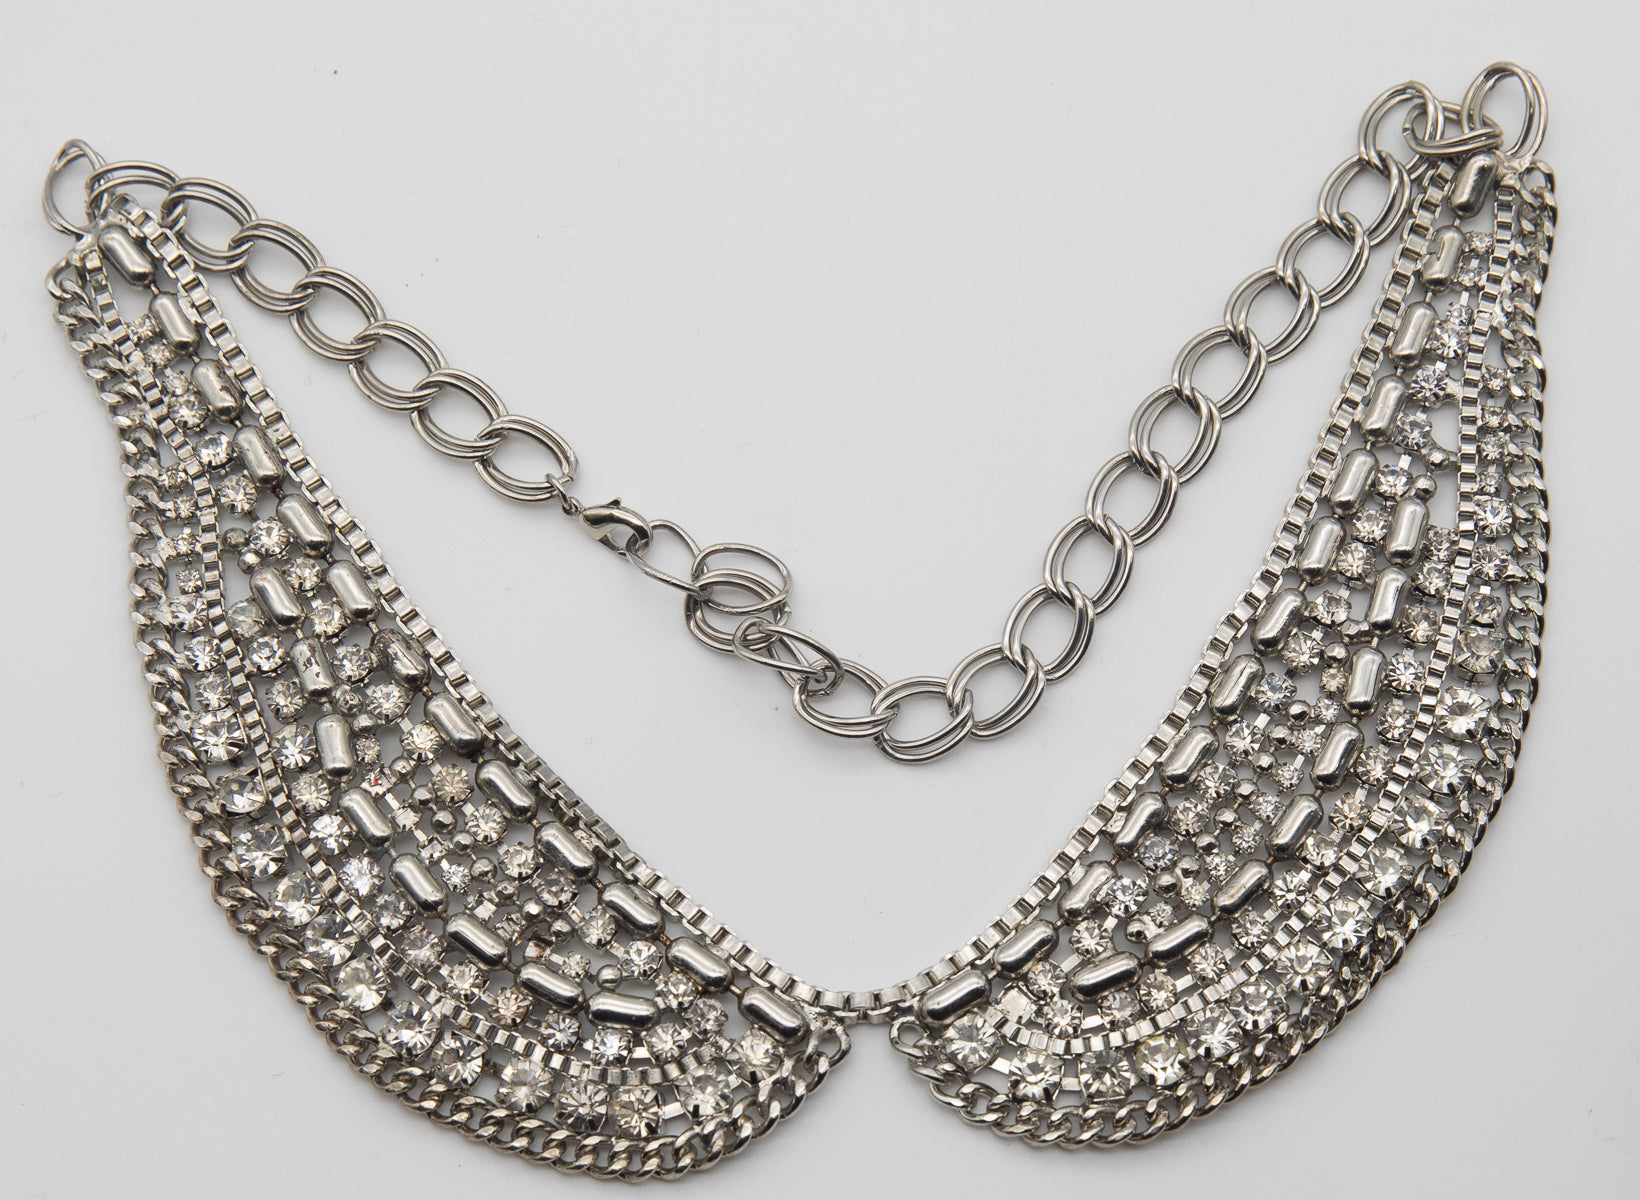 Vintage Rhinestone Collar Necklace - JD10711